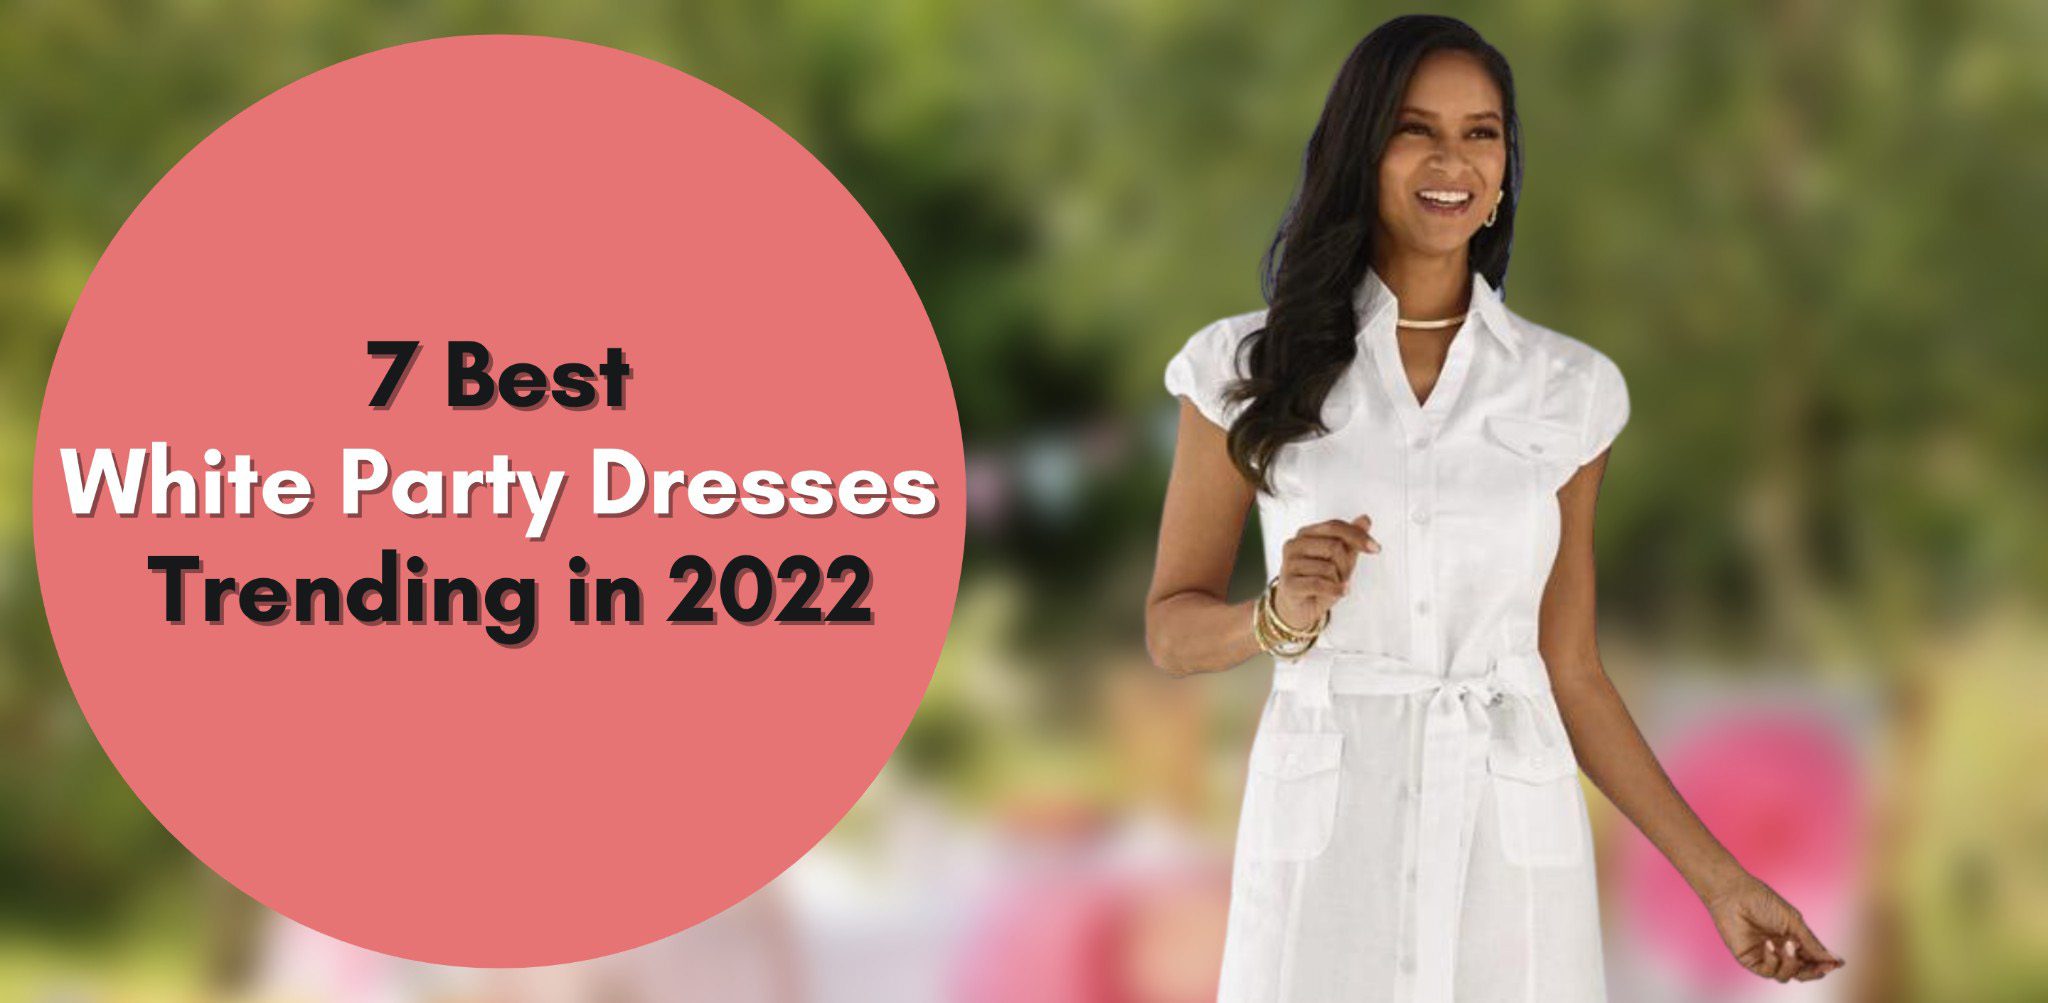 7 Best White Party Dresses Trending in 2022